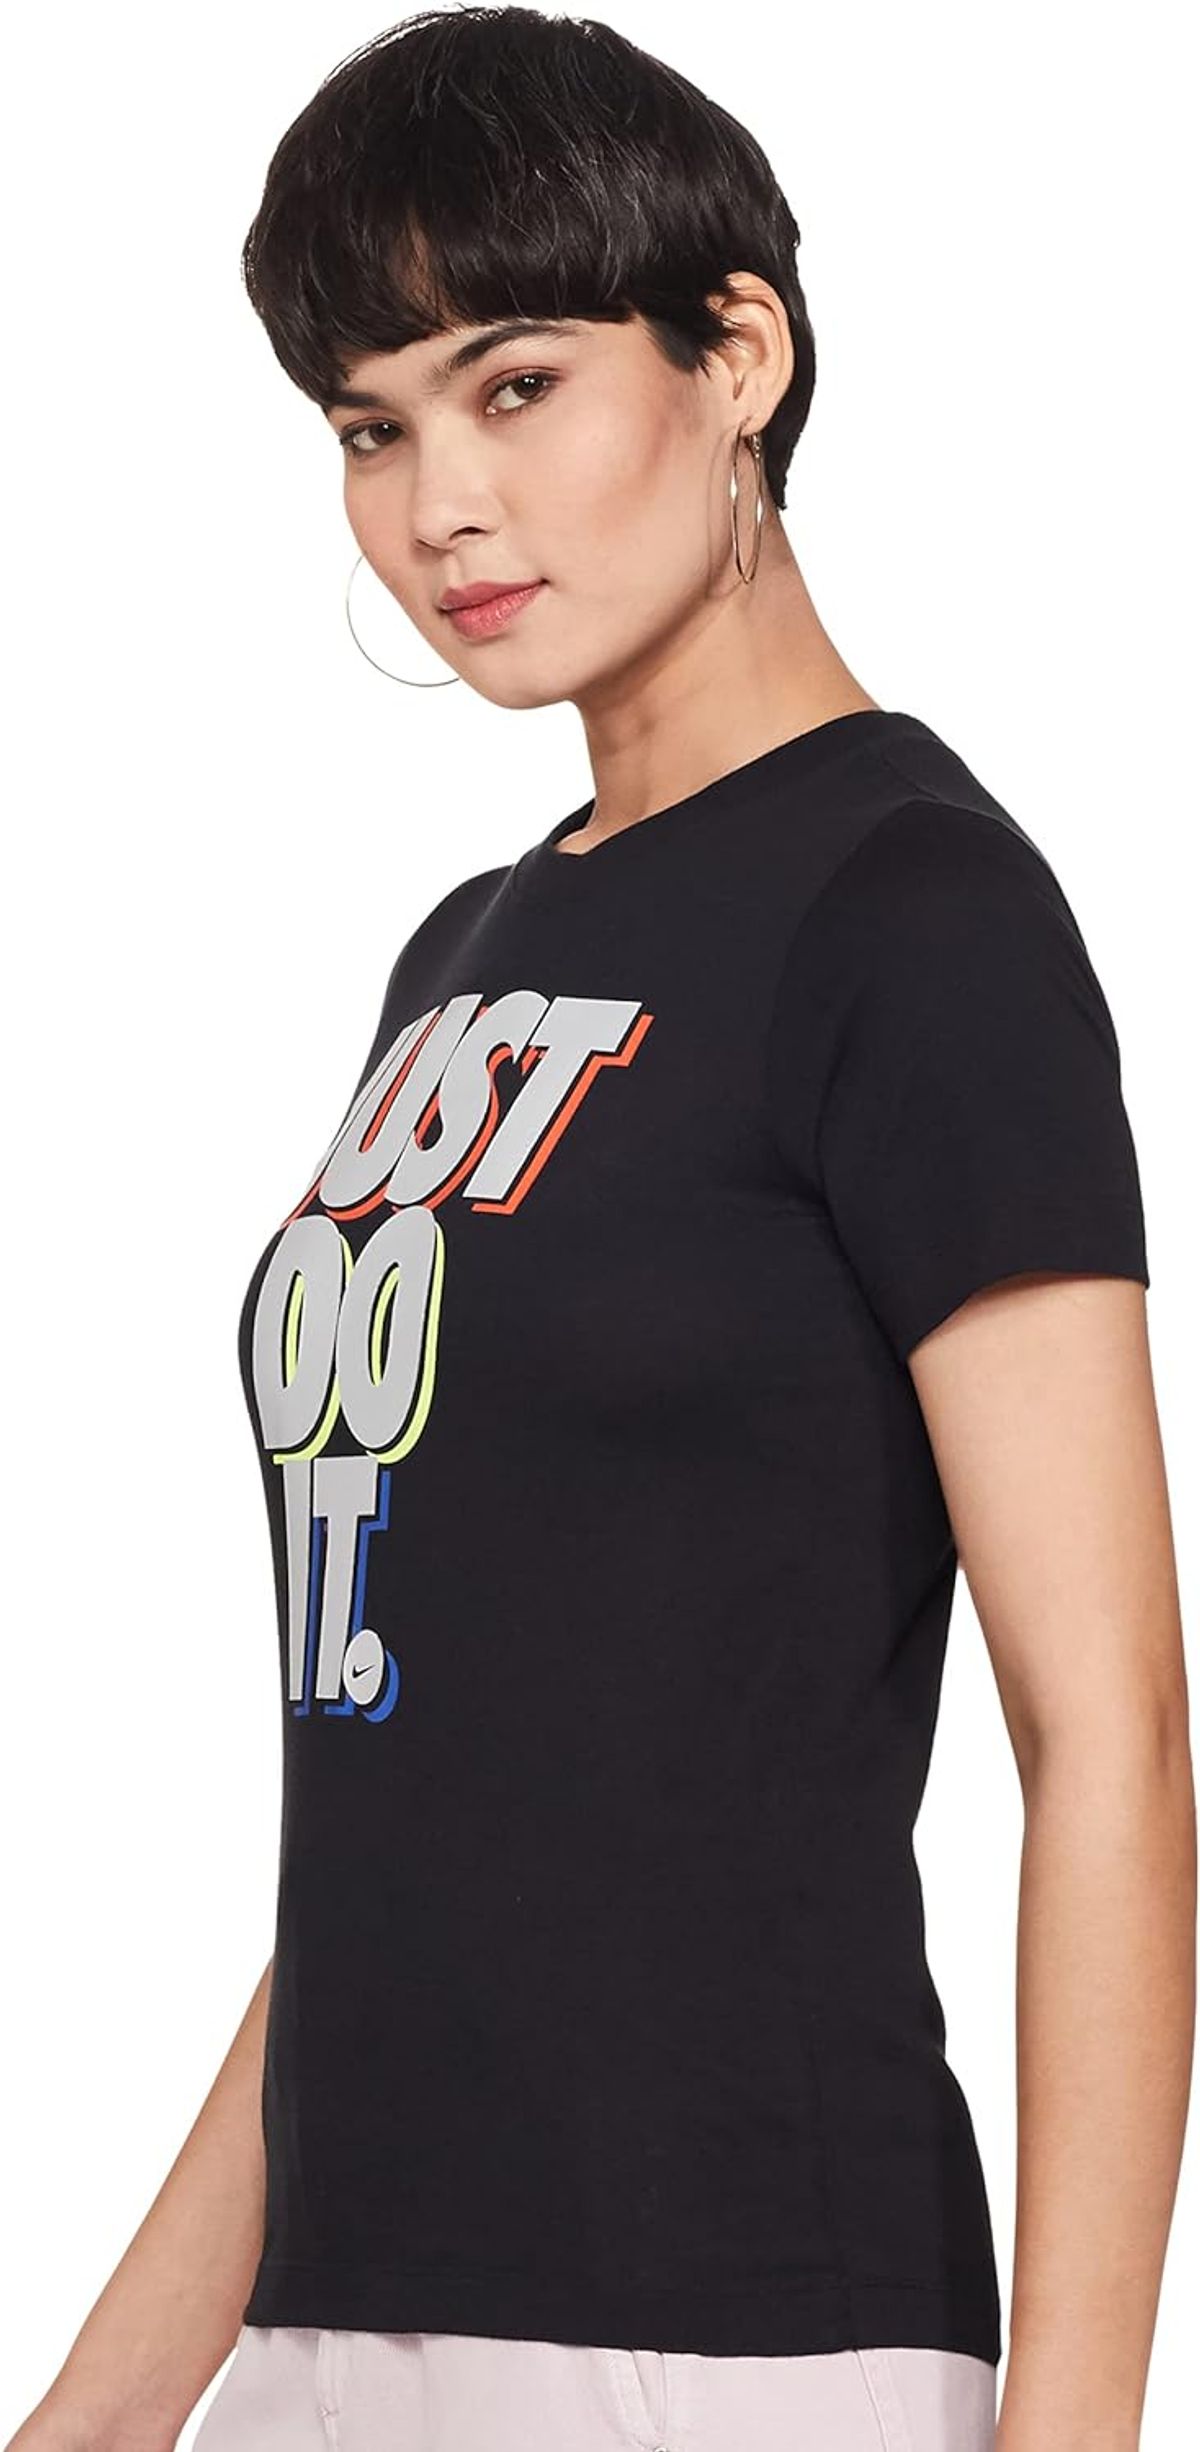 Nike unisex adult Sportswear T-Shirt - Black